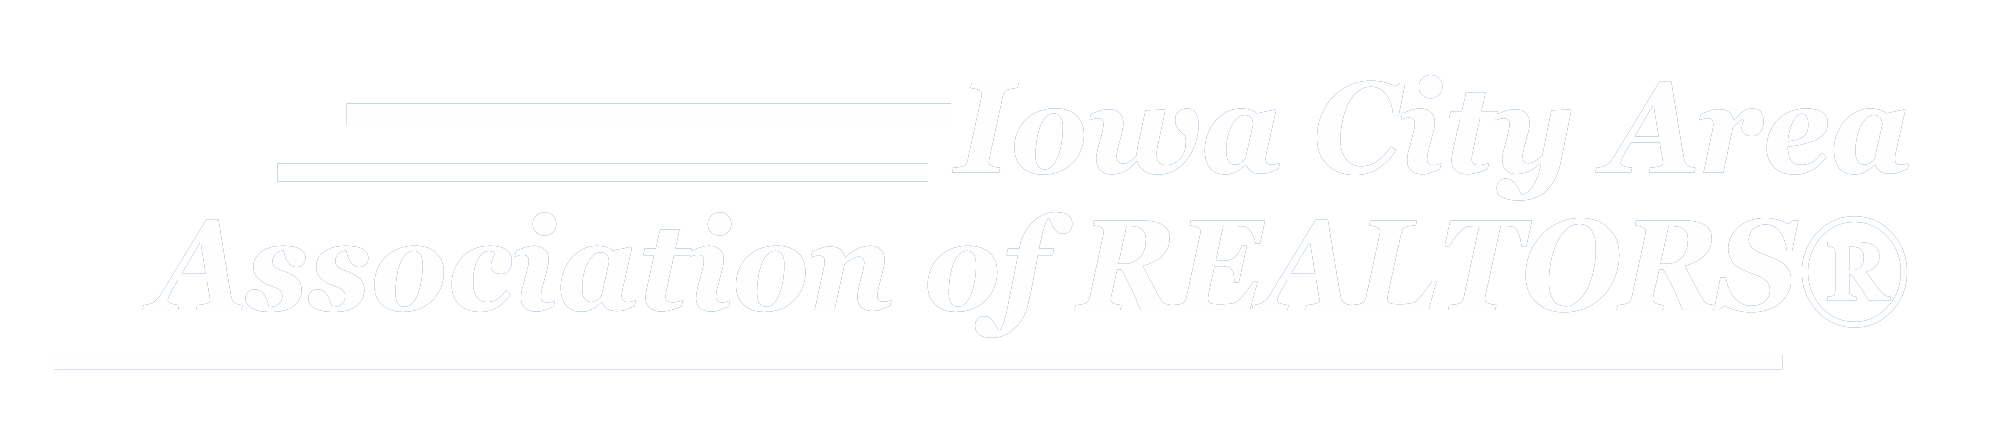 Areaa Logo - Iowa City Area Association of Realtors • Home Page